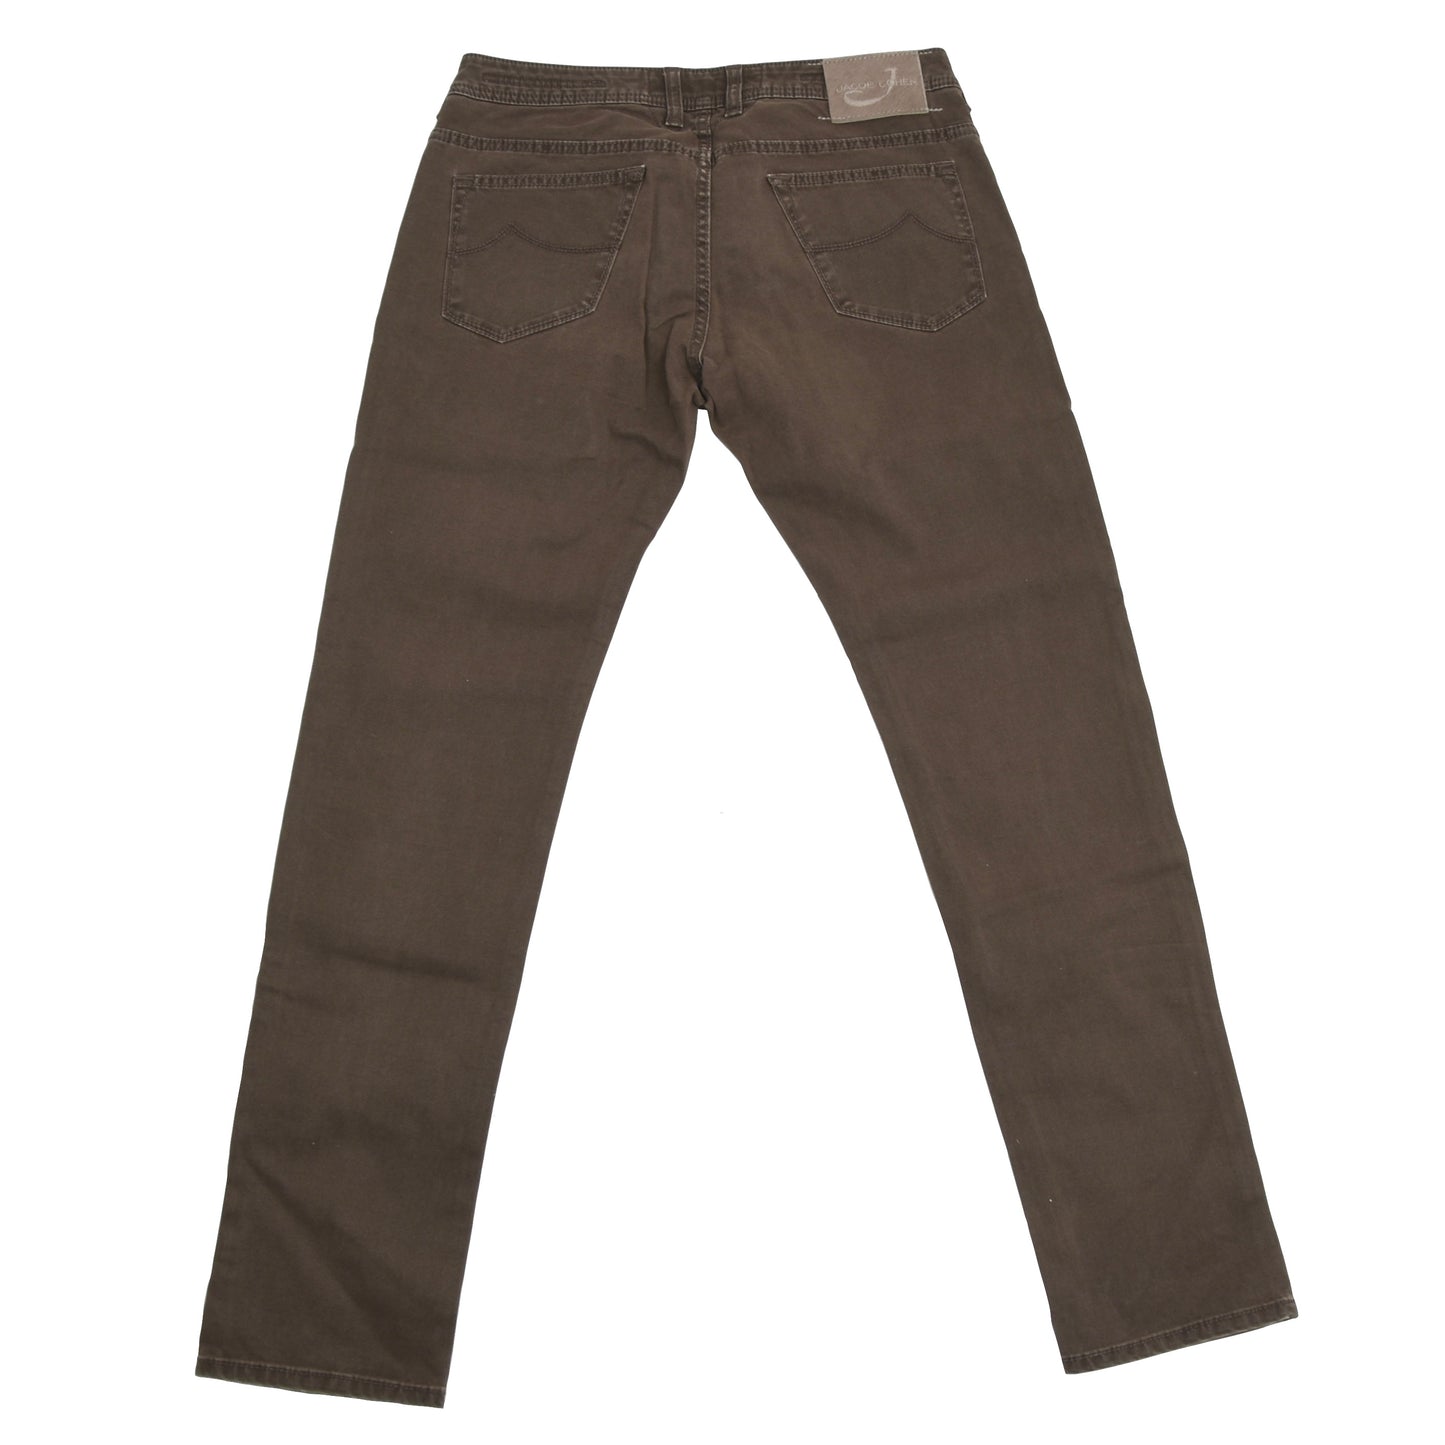 Jacob Cohën Jeans Model J613 Comfort Size W35 - Brown